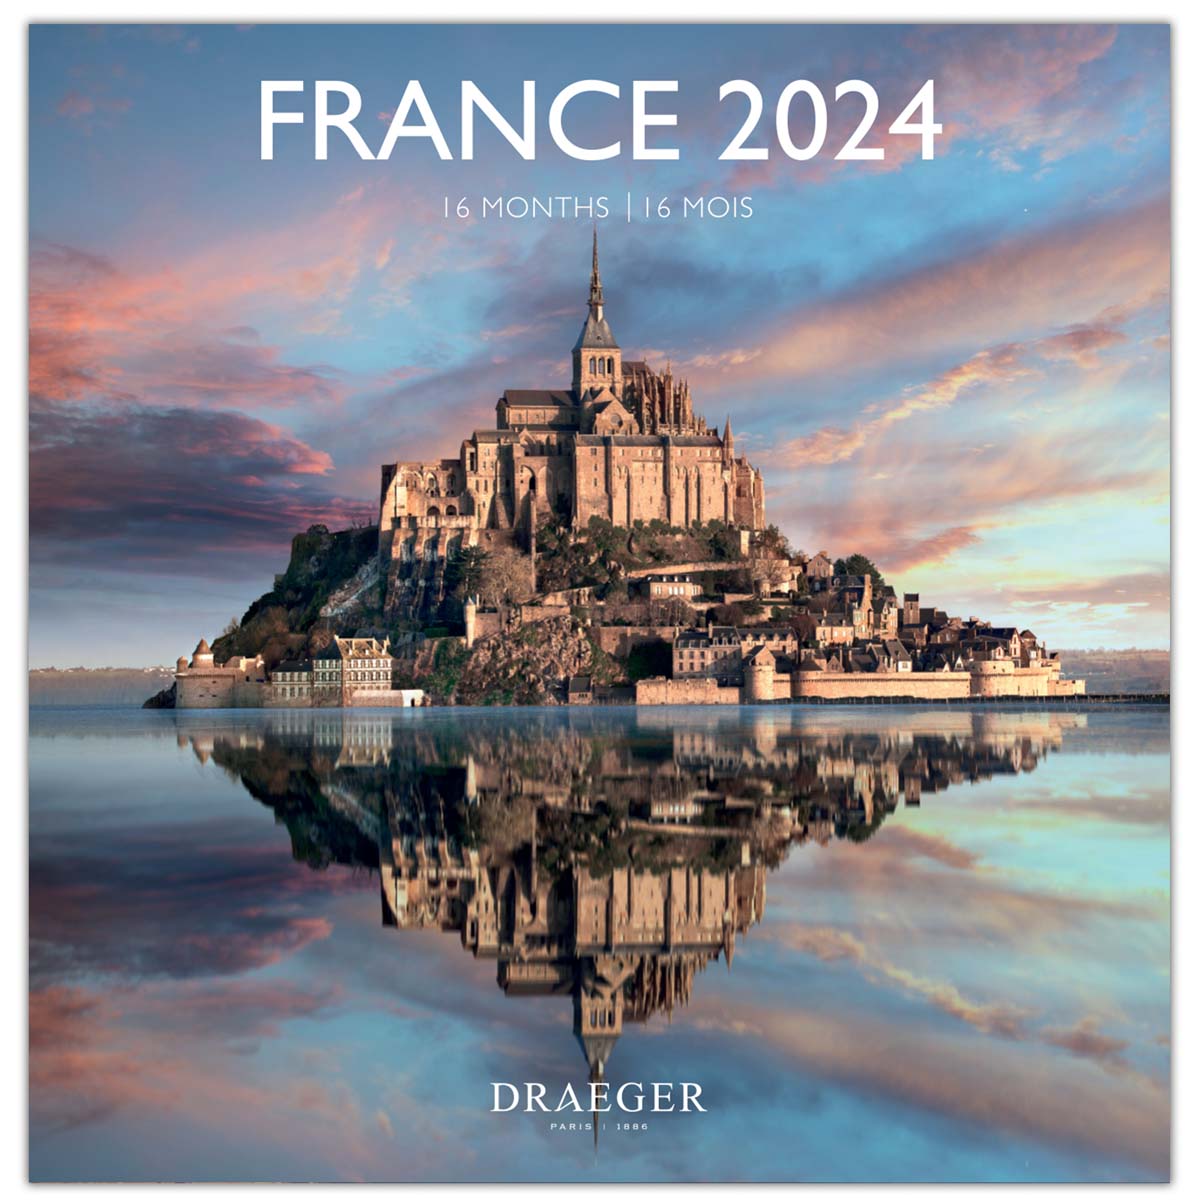 Grand Calendrier Theme France 2024